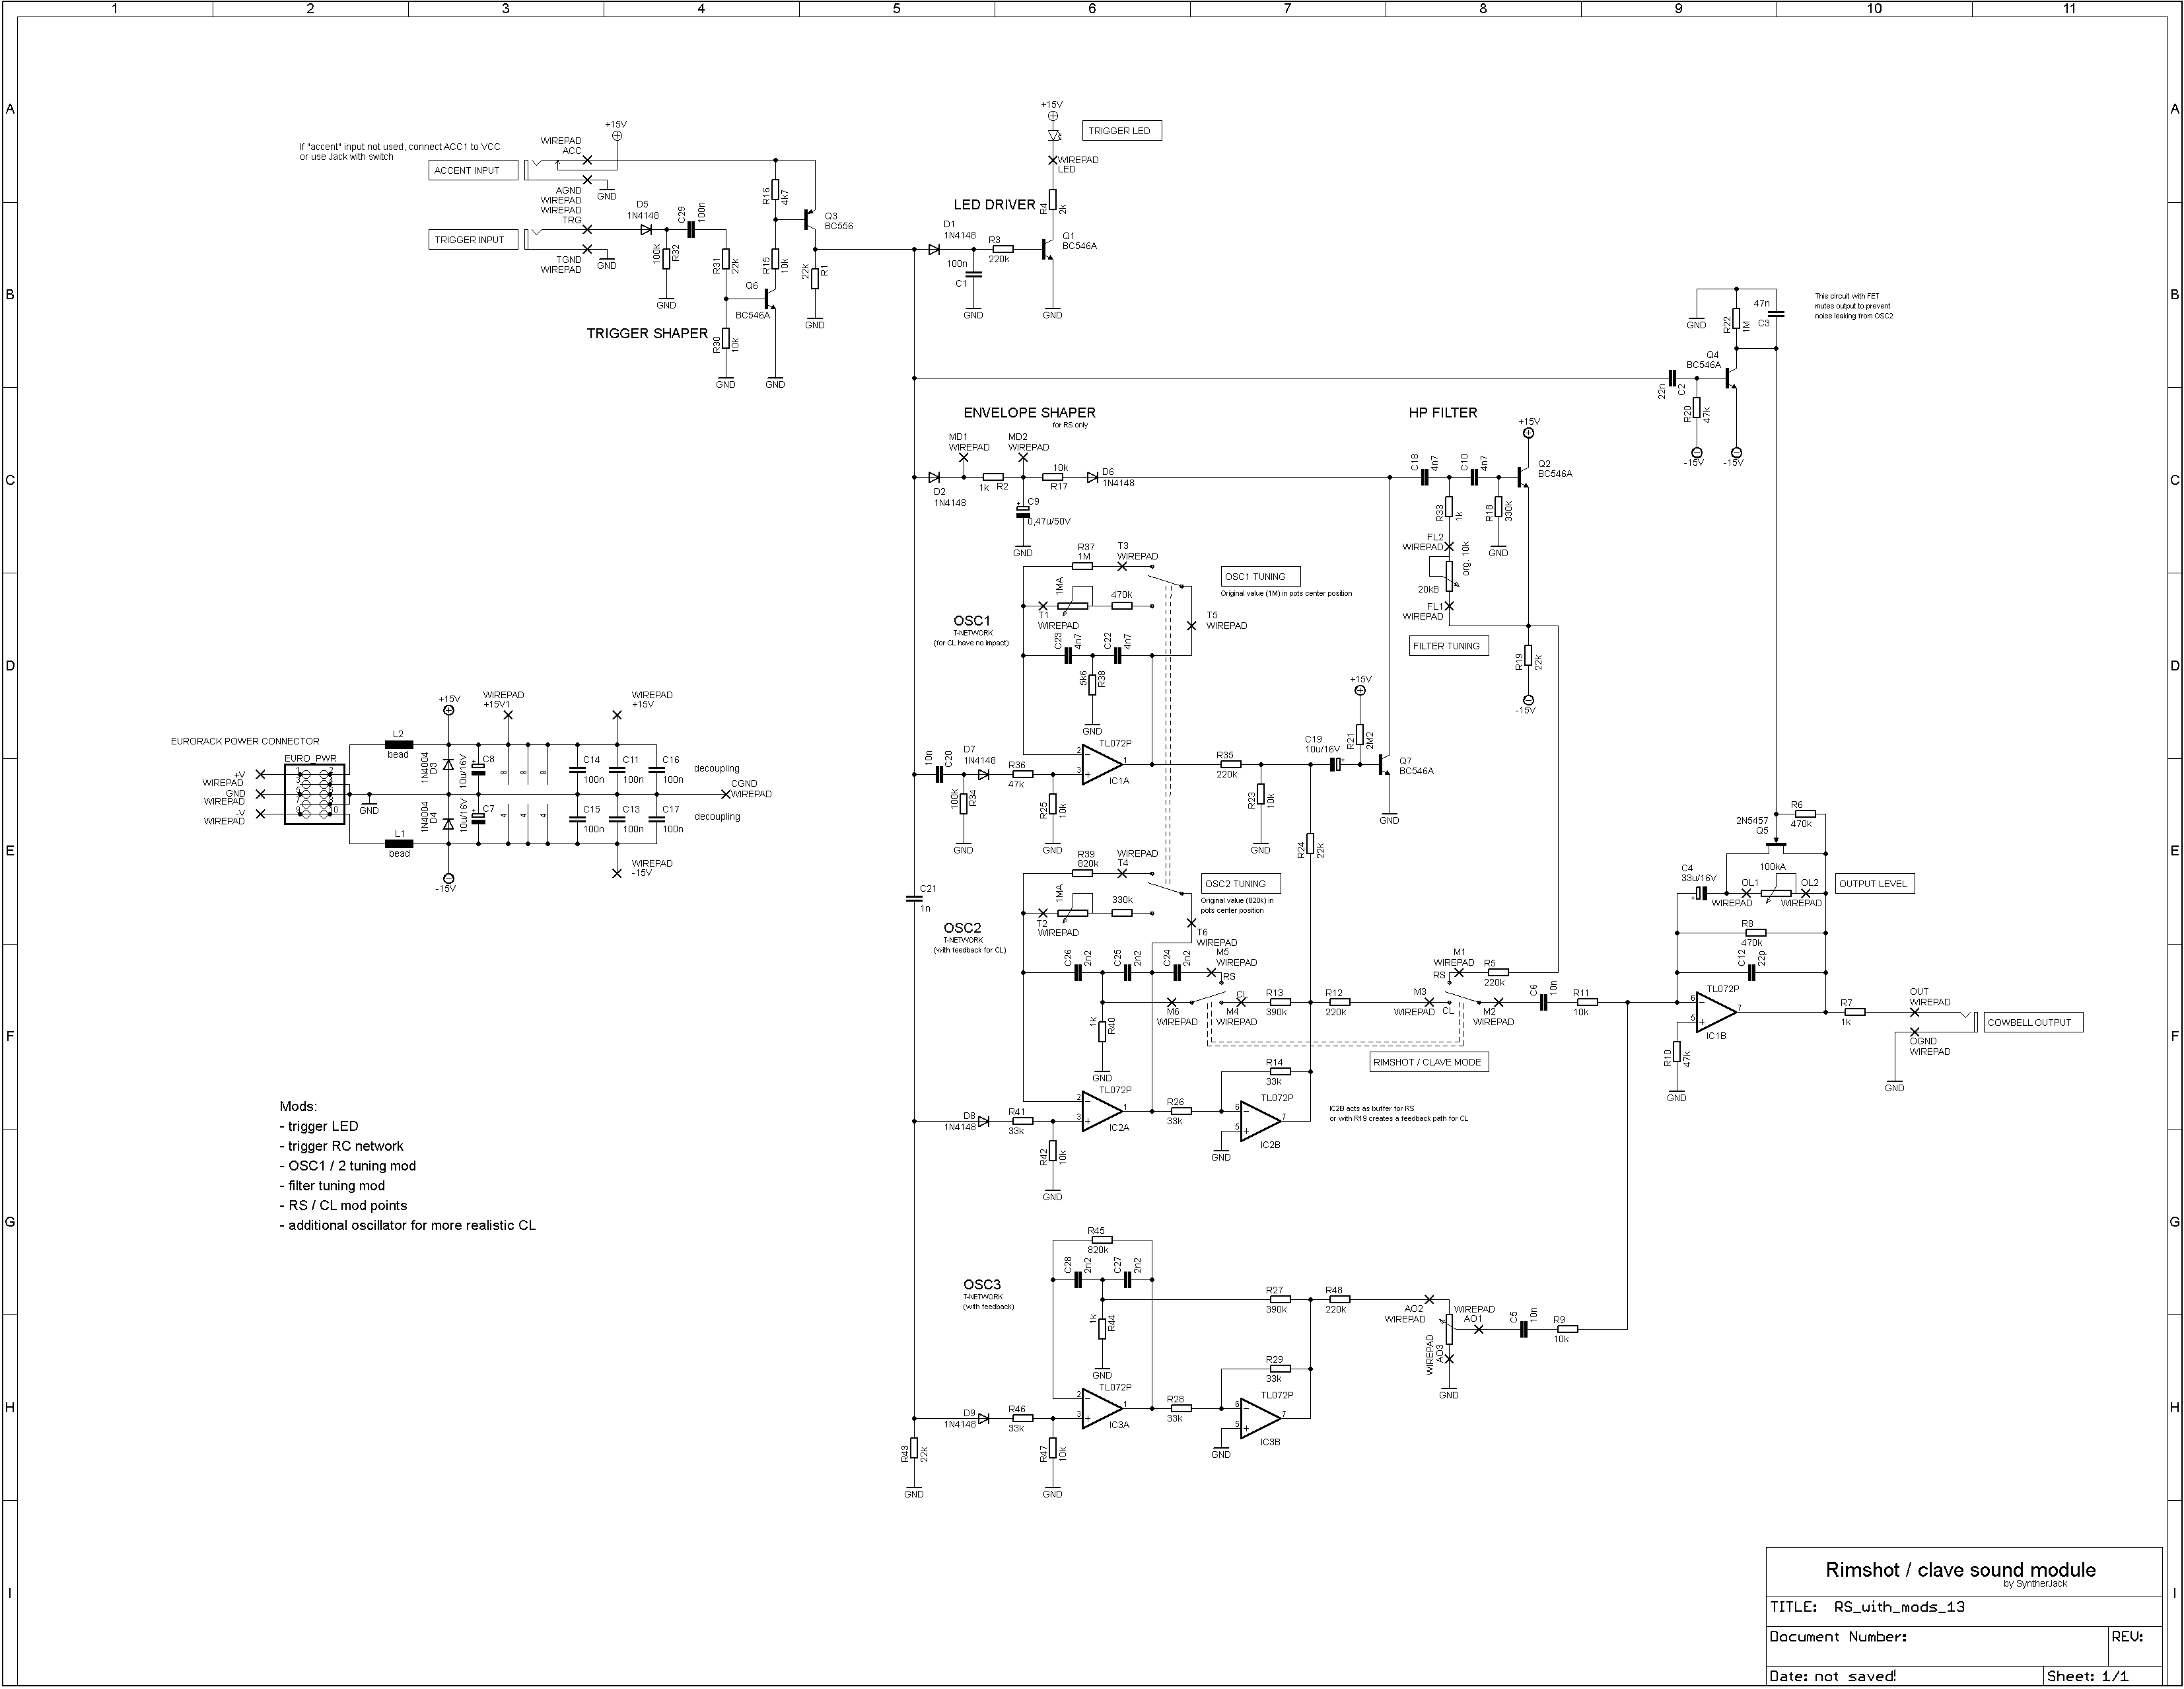 Rimshot / Clave schematics, based on TR808 circuit